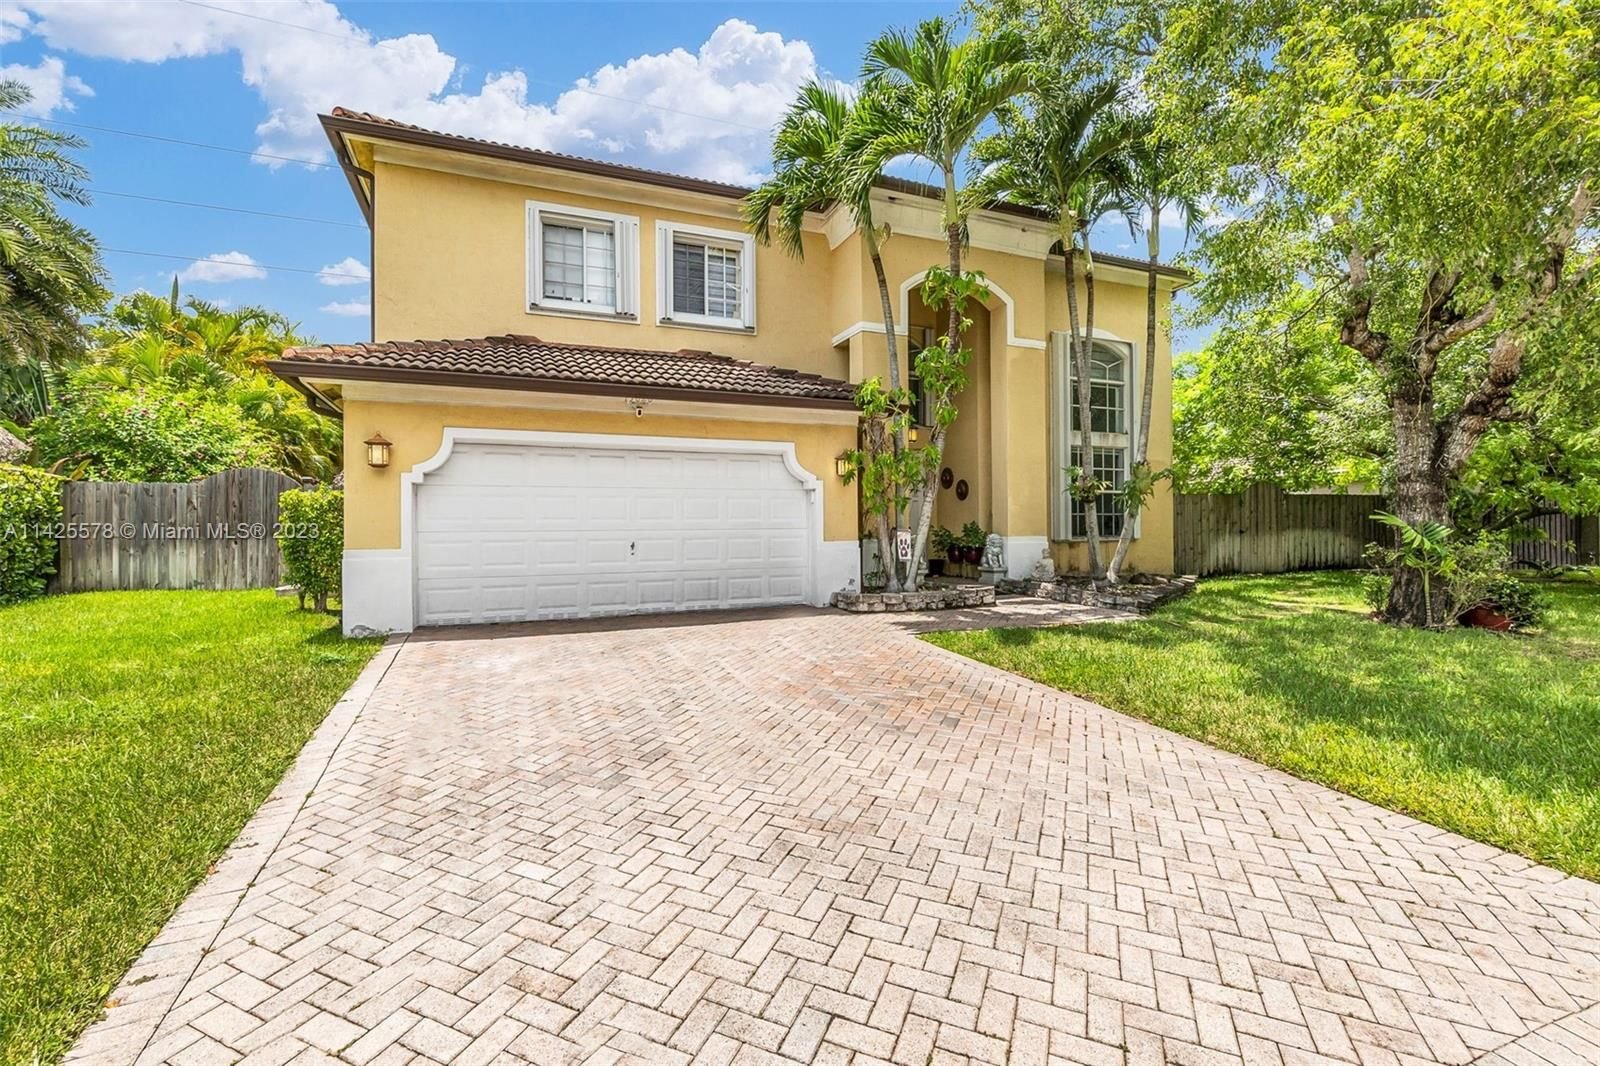 Real estate property located at 15020 156th Ave, Miami-Dade County, Miami, FL